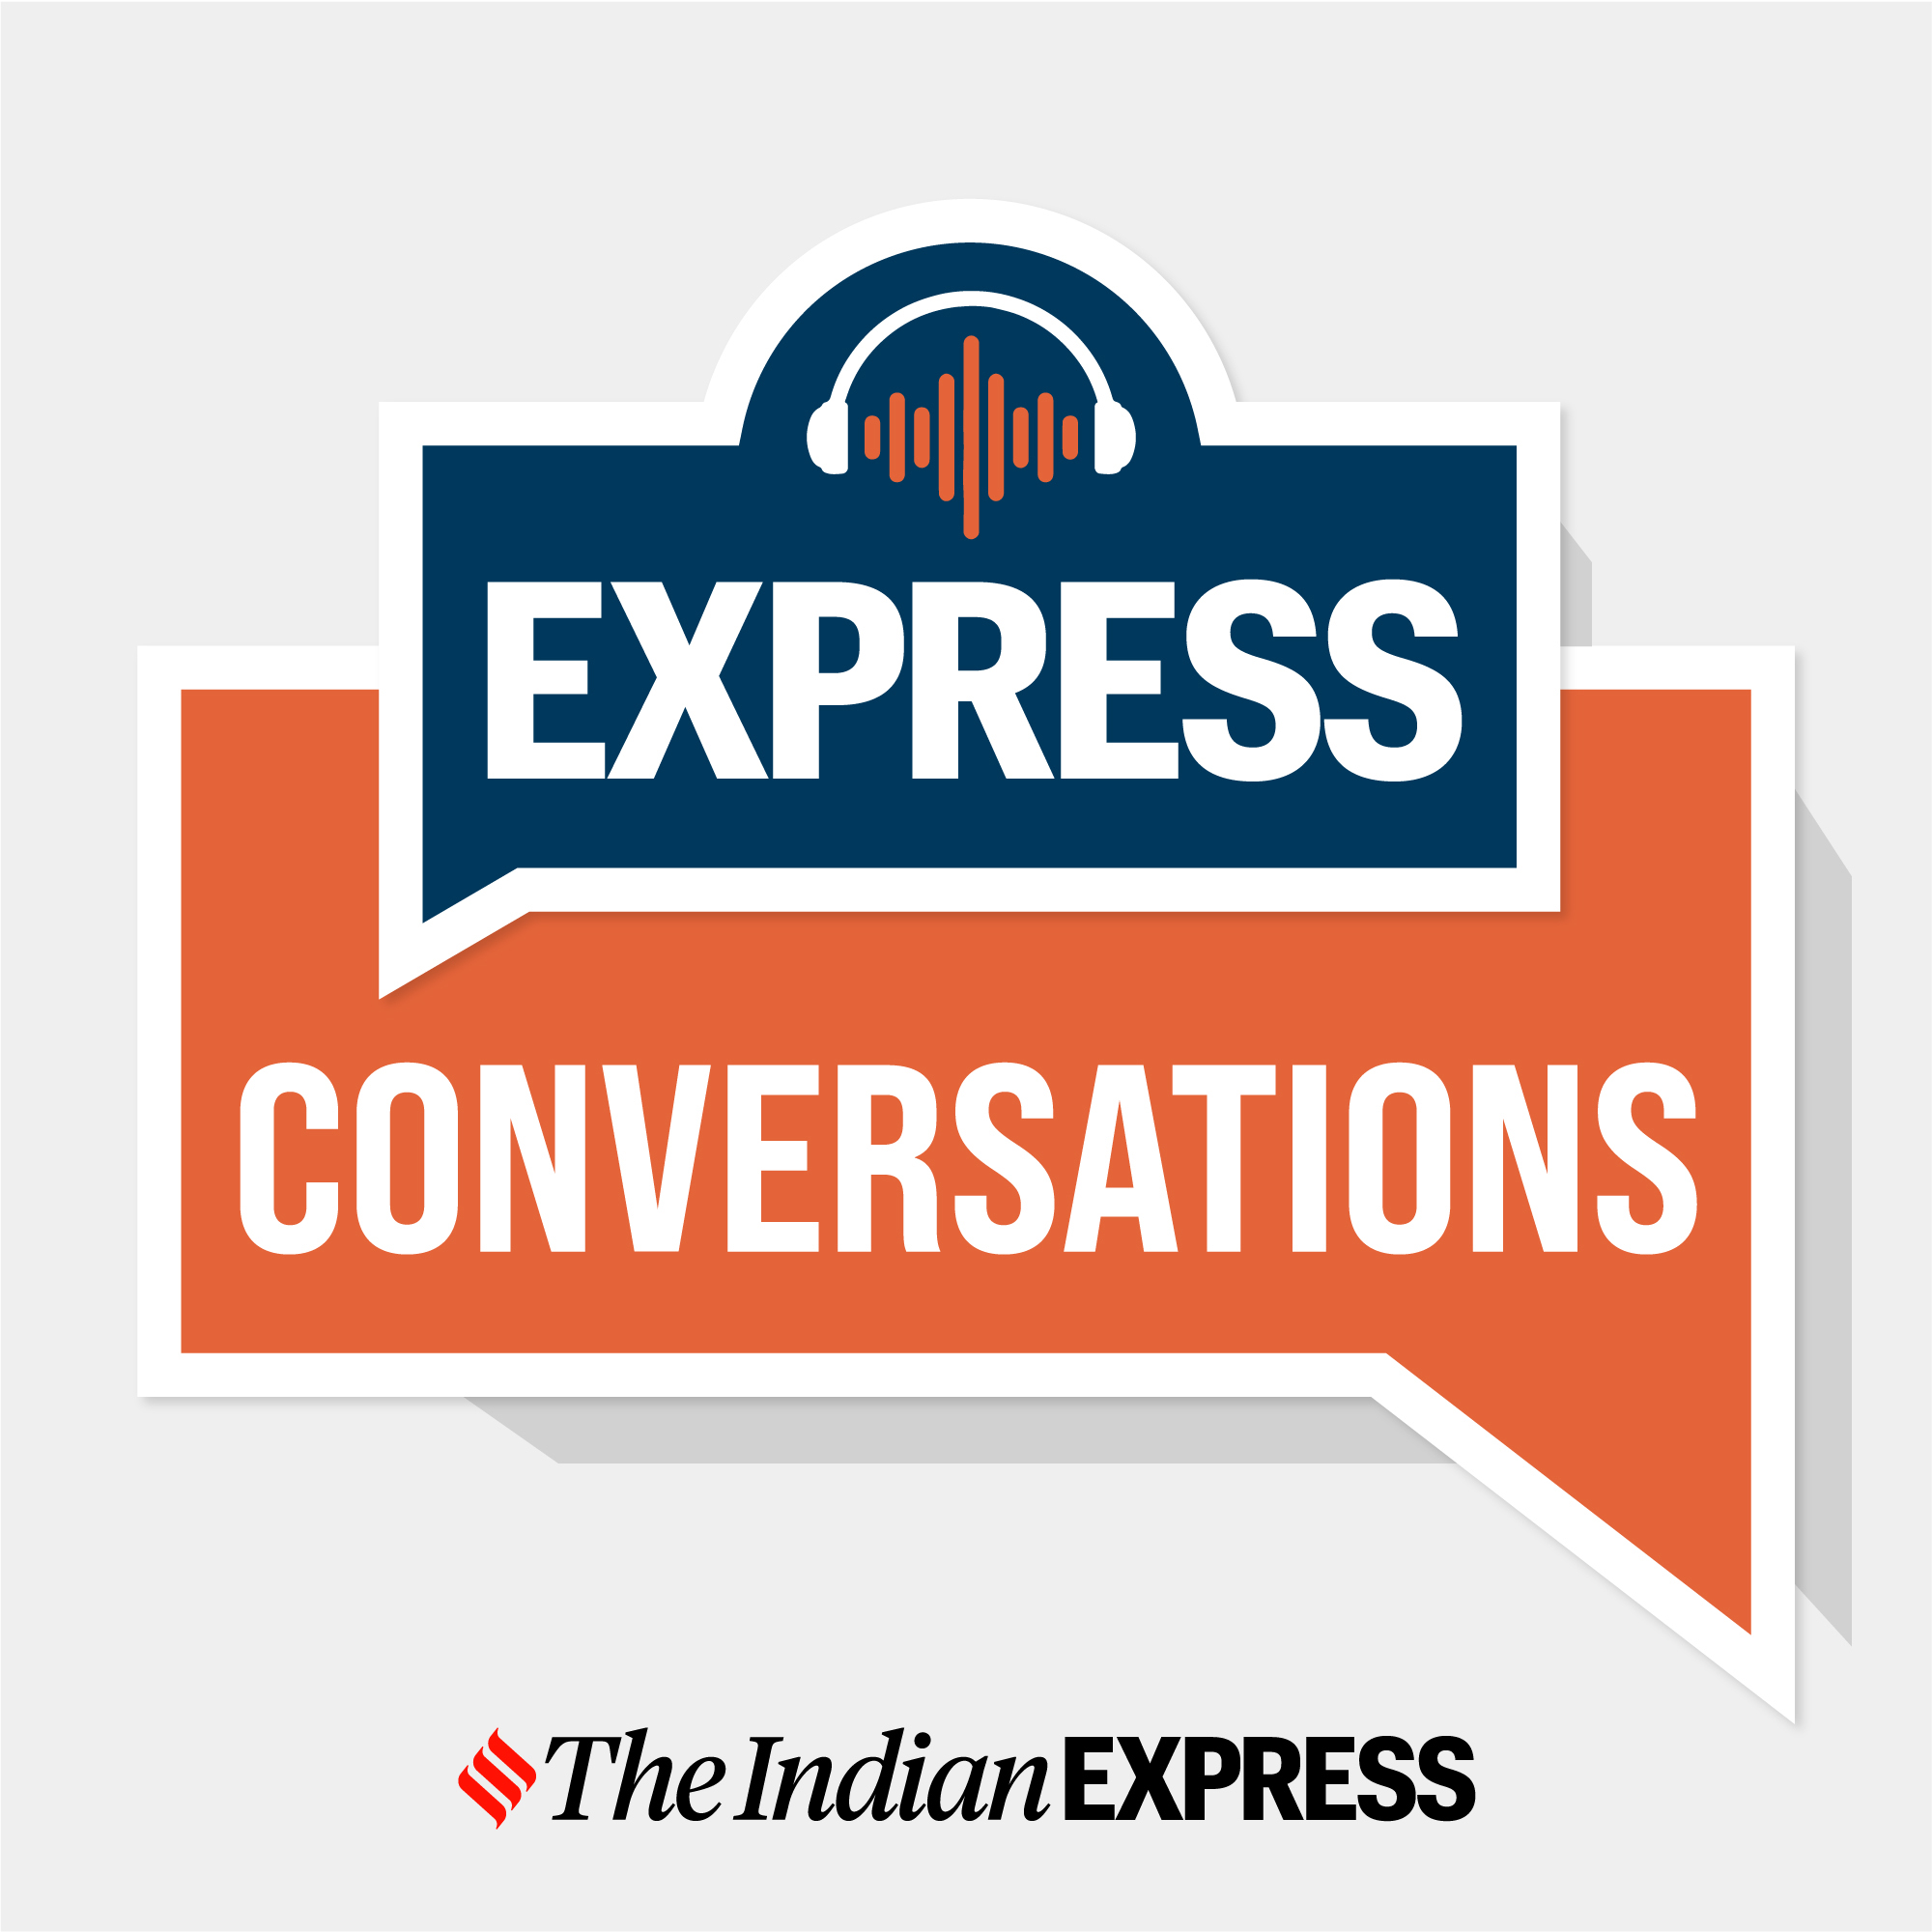 Express Conversations The Indian Express 